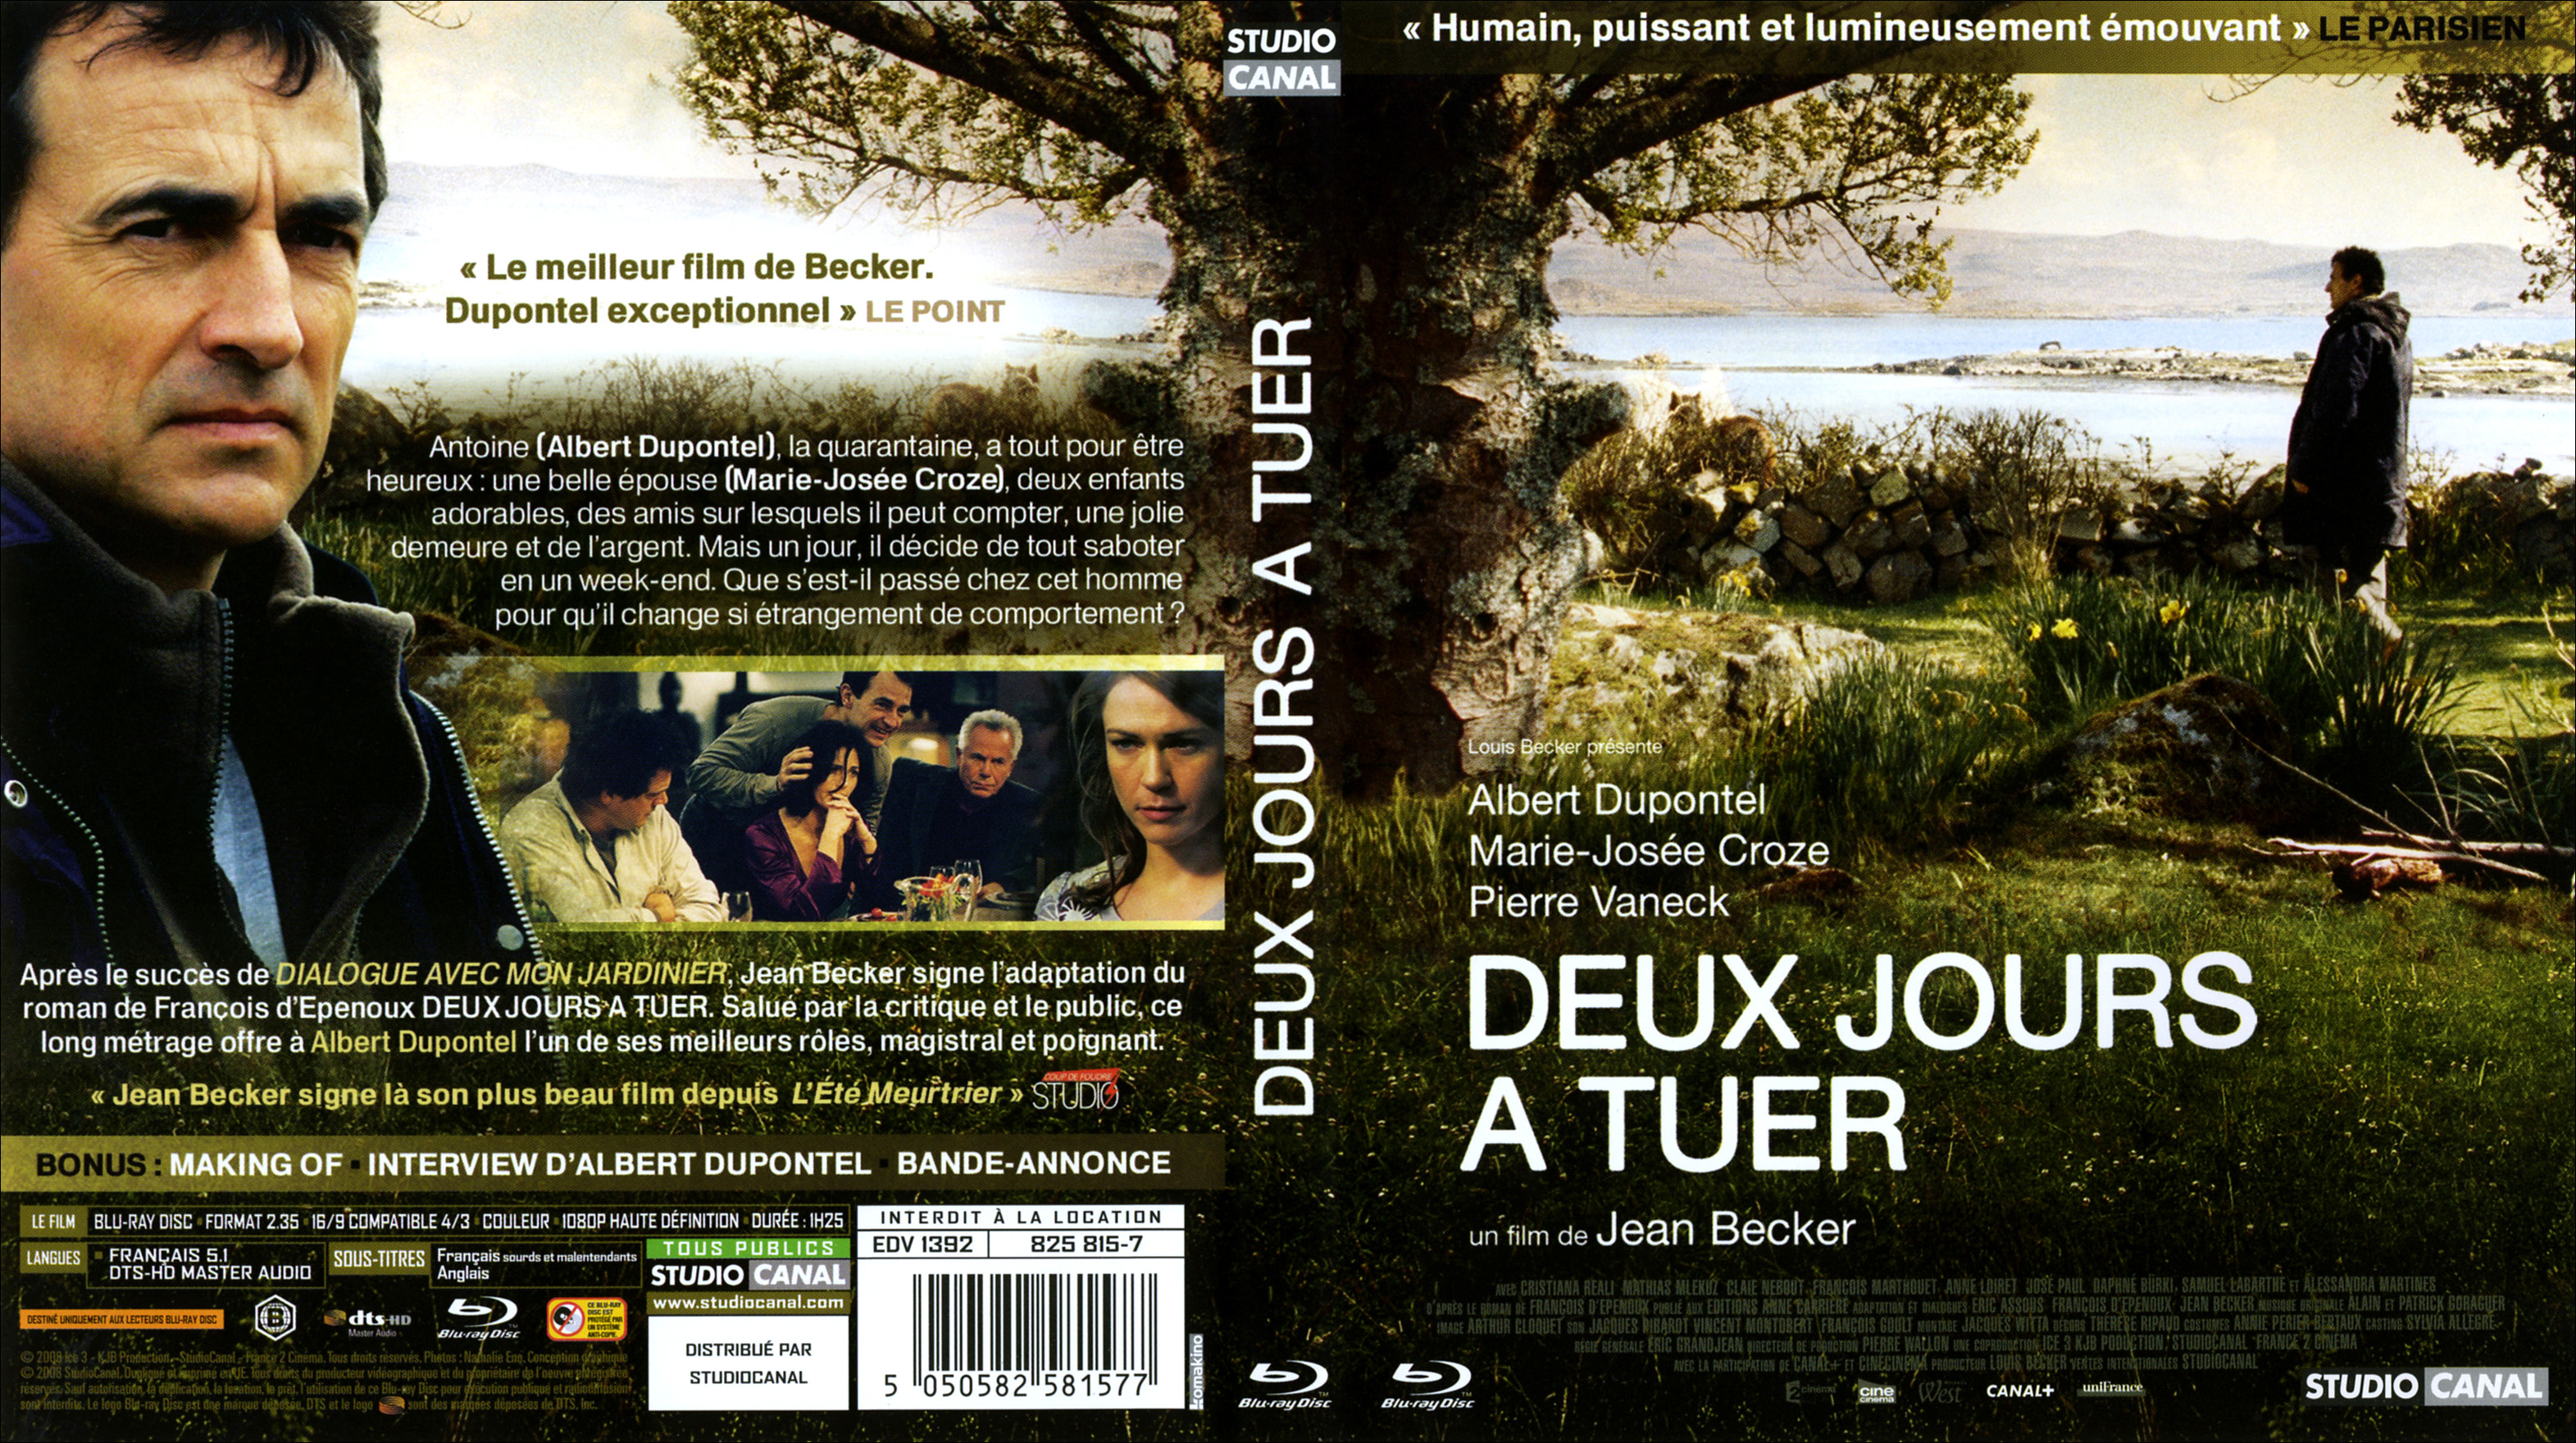 Jaquette DVD Deux jours  tuer (BLU-RAY)